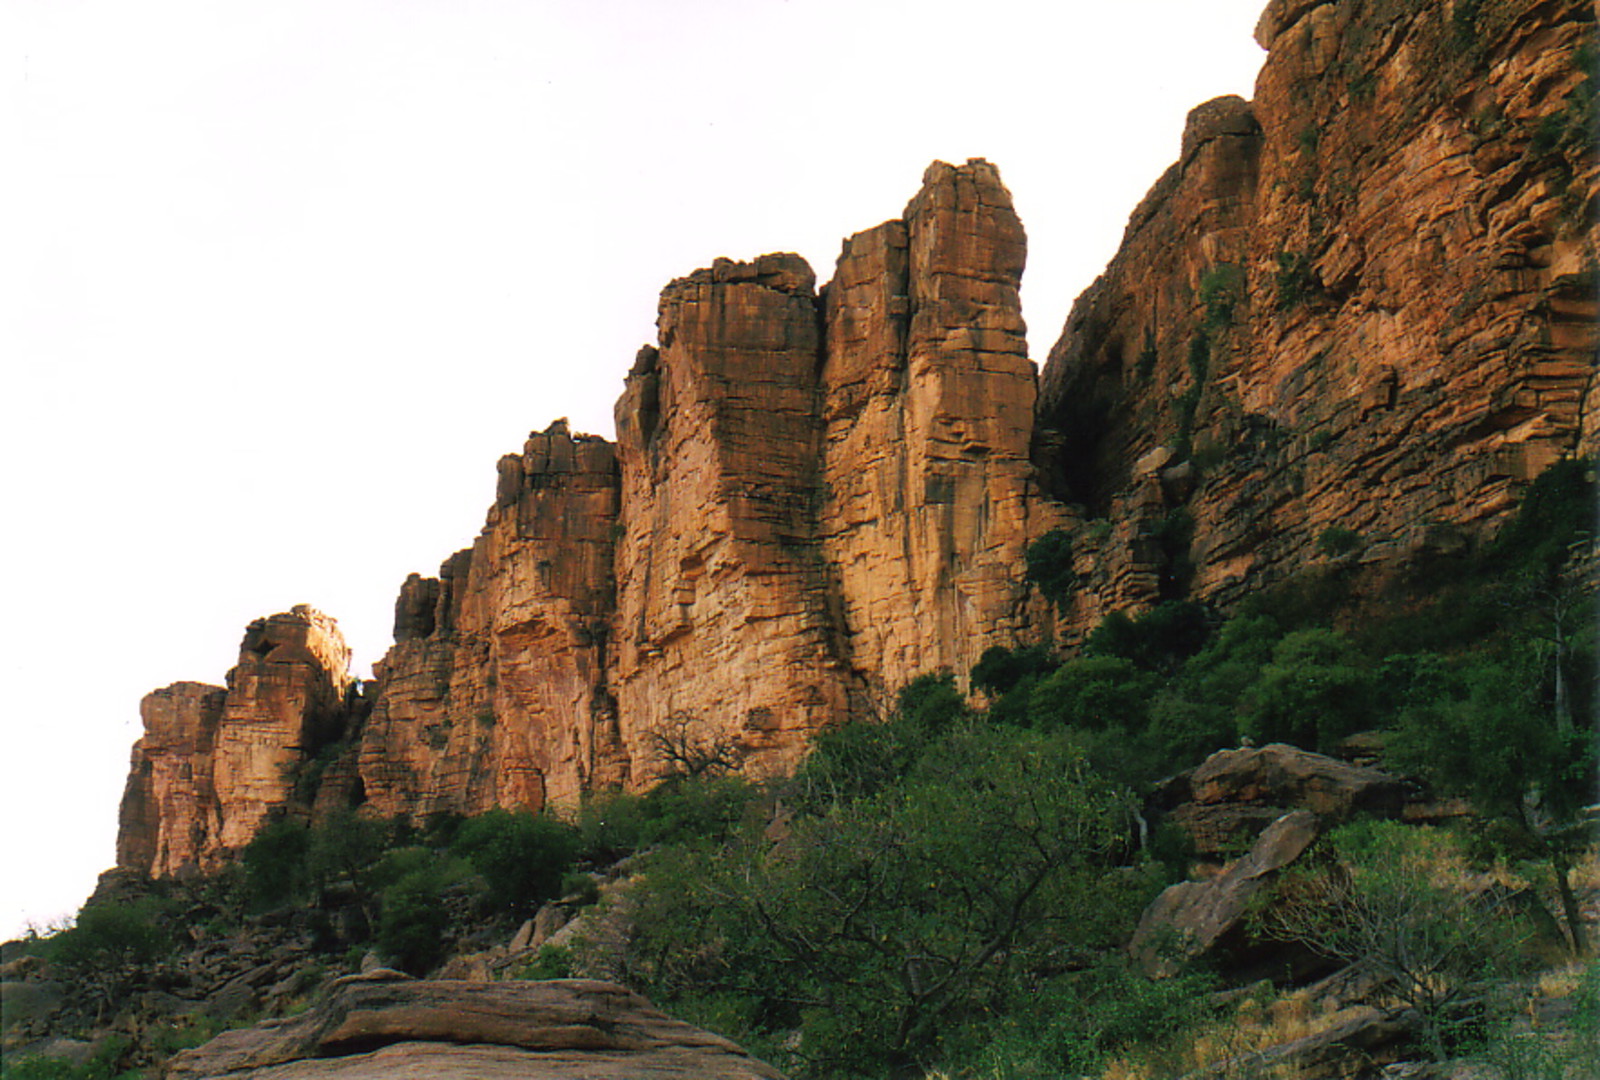 A jagged section of the Bandiagara Escarpment